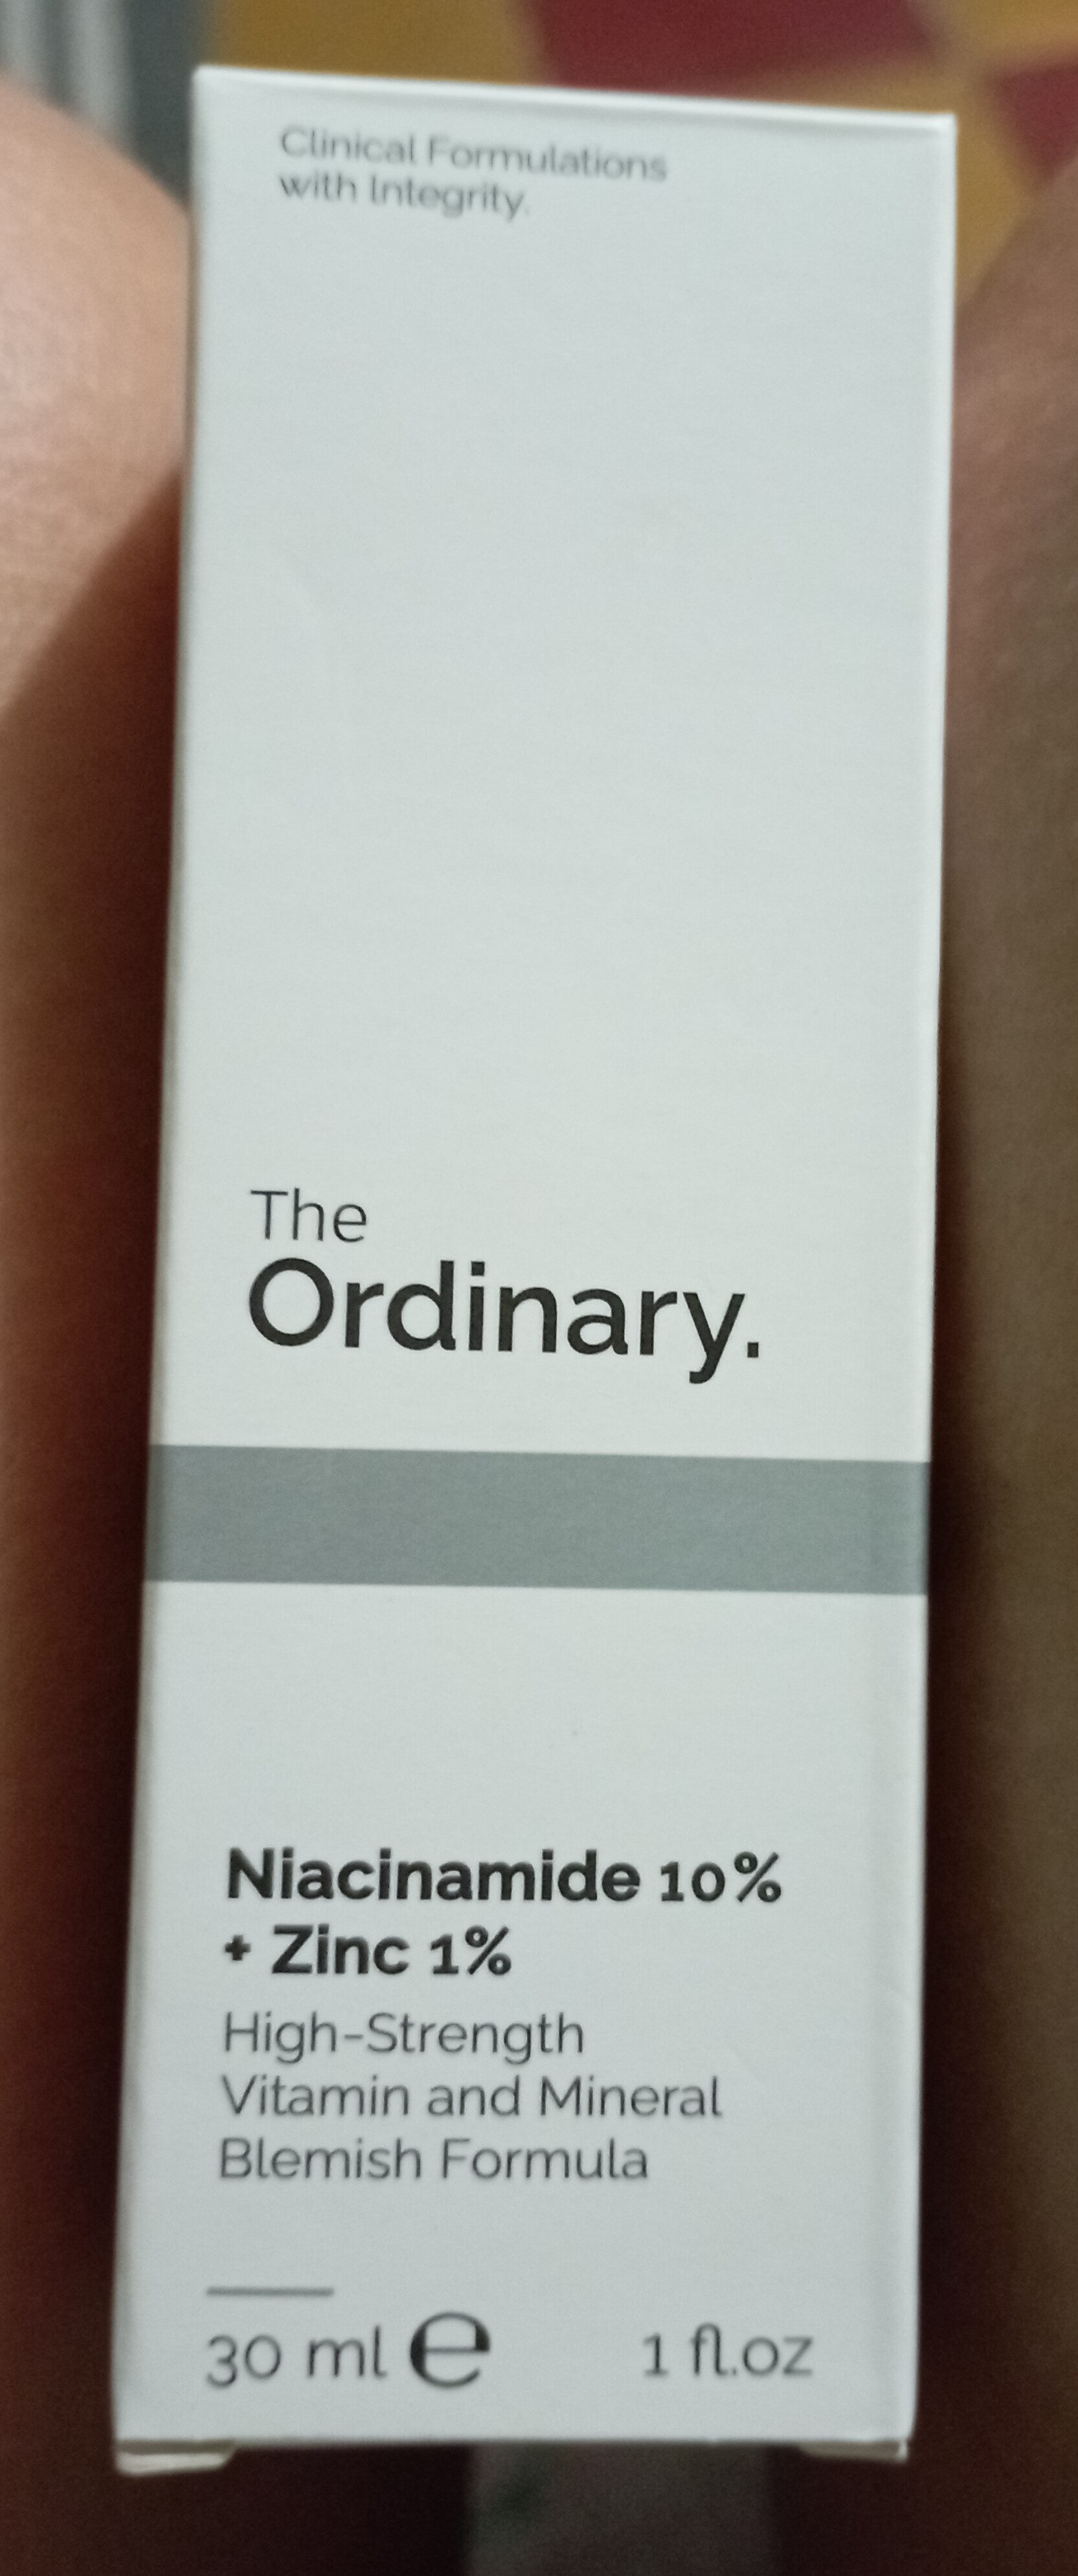 The ordinary - Продукт - en